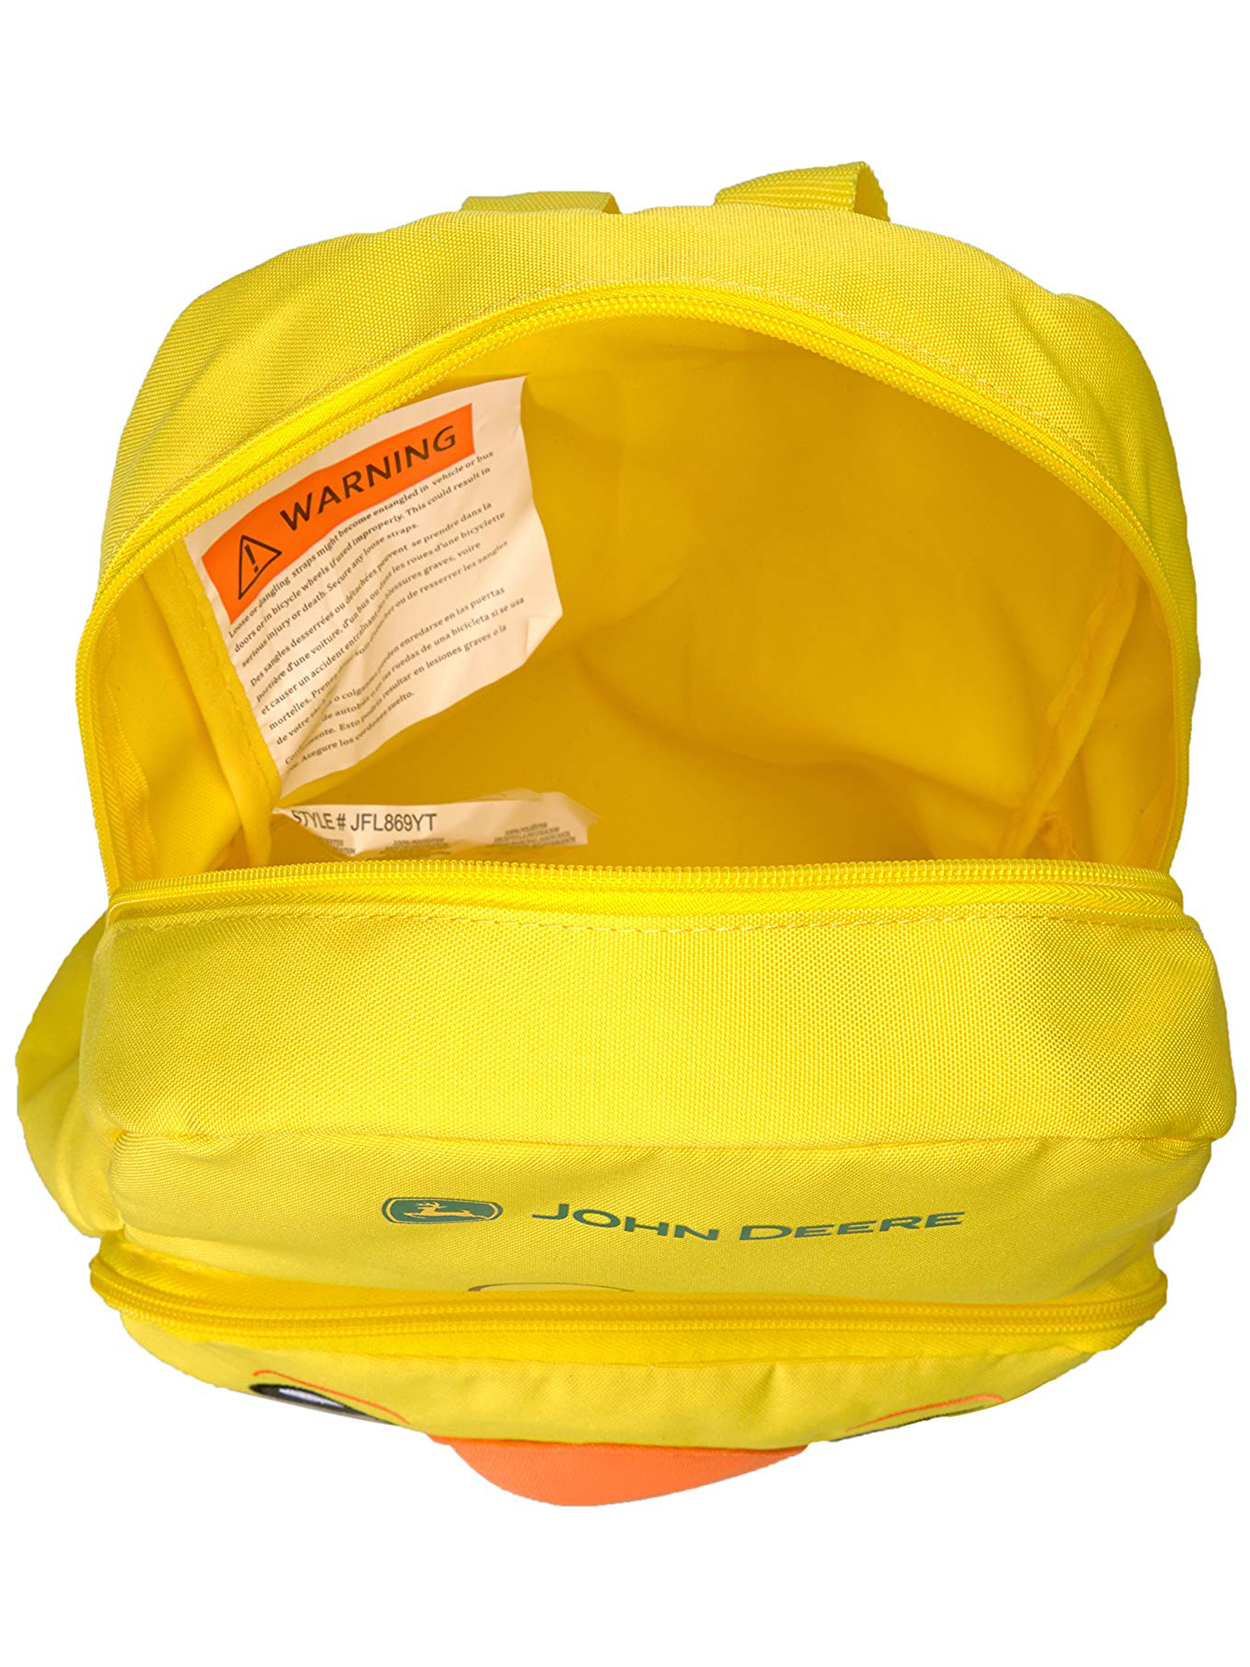 John Deere Chick Toddler 13 inch Yellow Mini Backpack JFL869YT - image 4 of 5